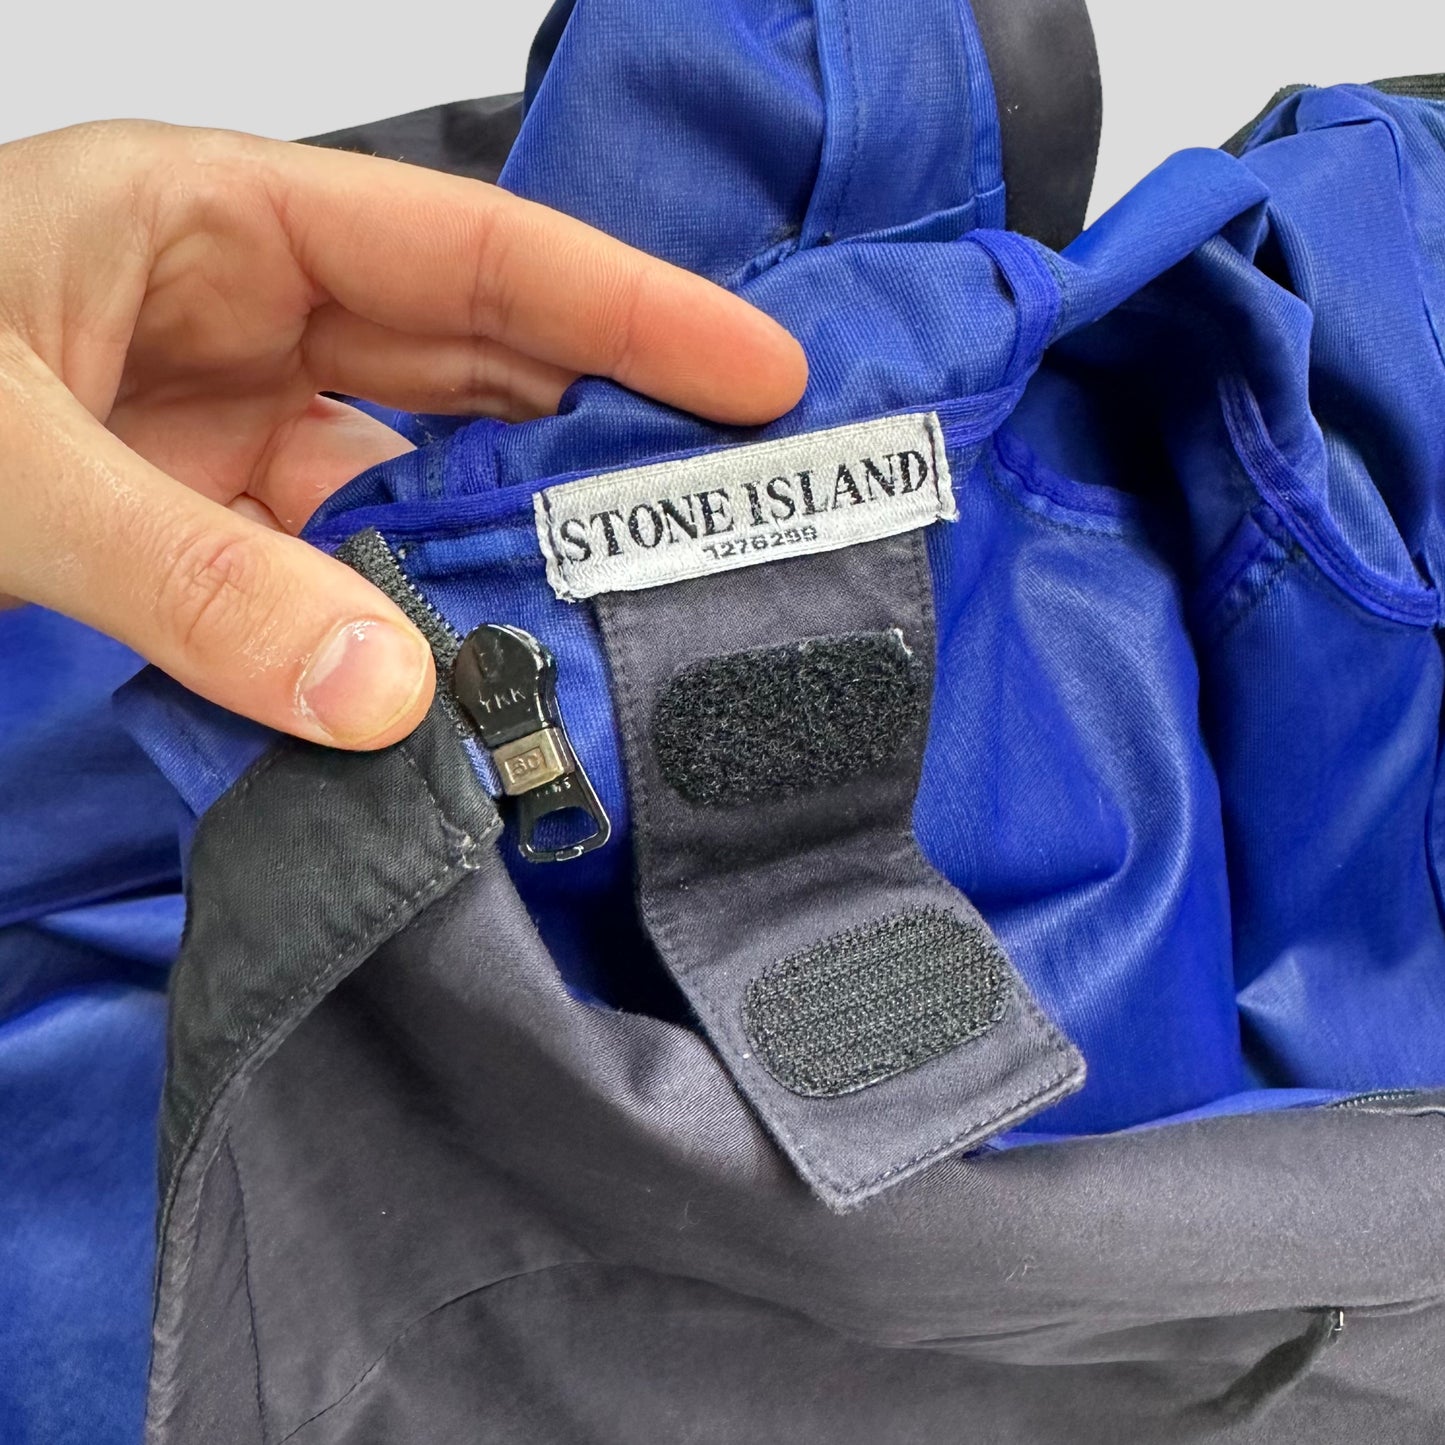 Stone Island SS08 Waterproof Technical Co-nylon Jacket - M/L